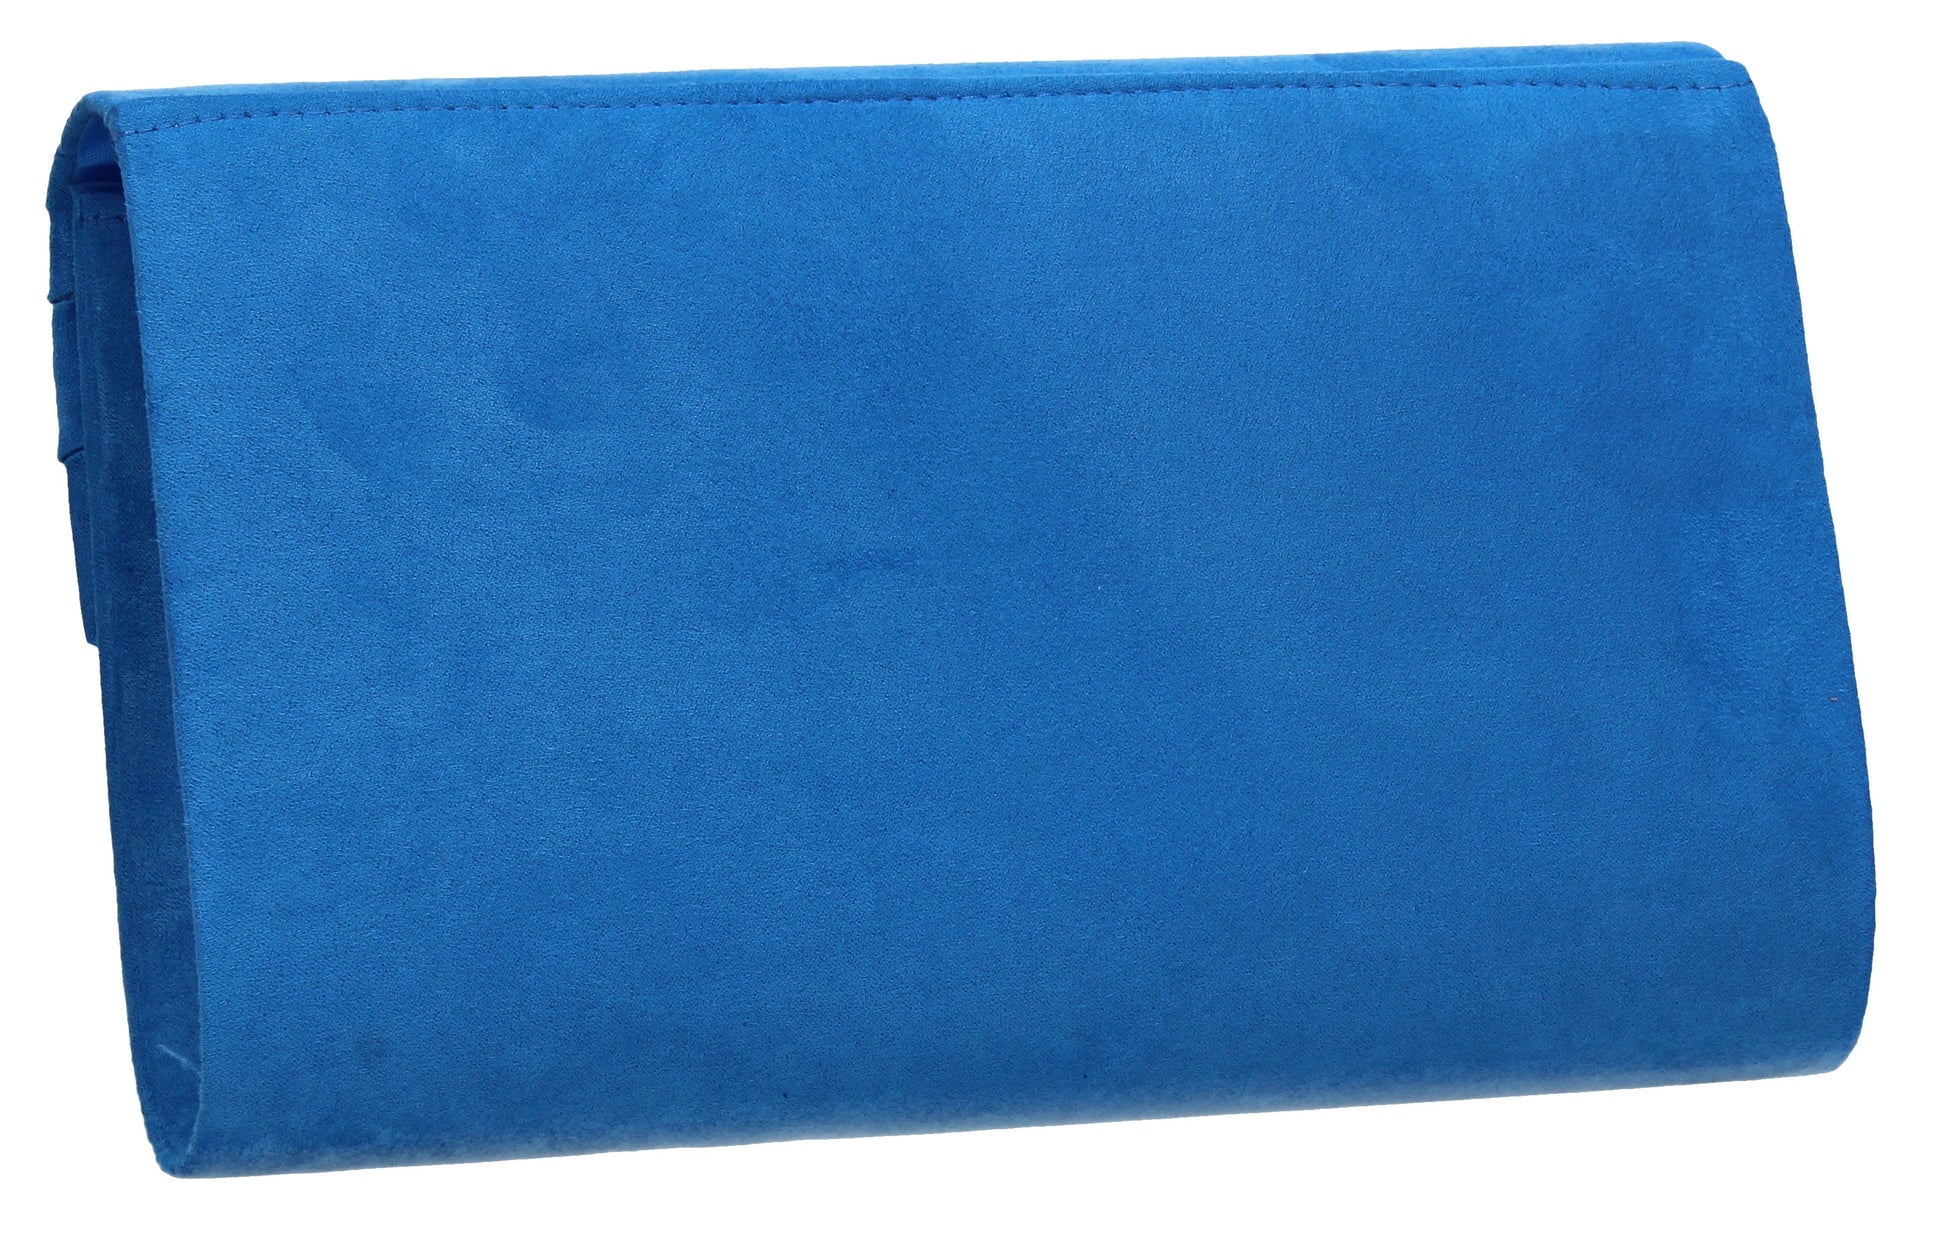 SWANKYSWANS Samantha V Detail Clutch Bag Blue Cute Cheap Clutch Bag For Weddings School and Work